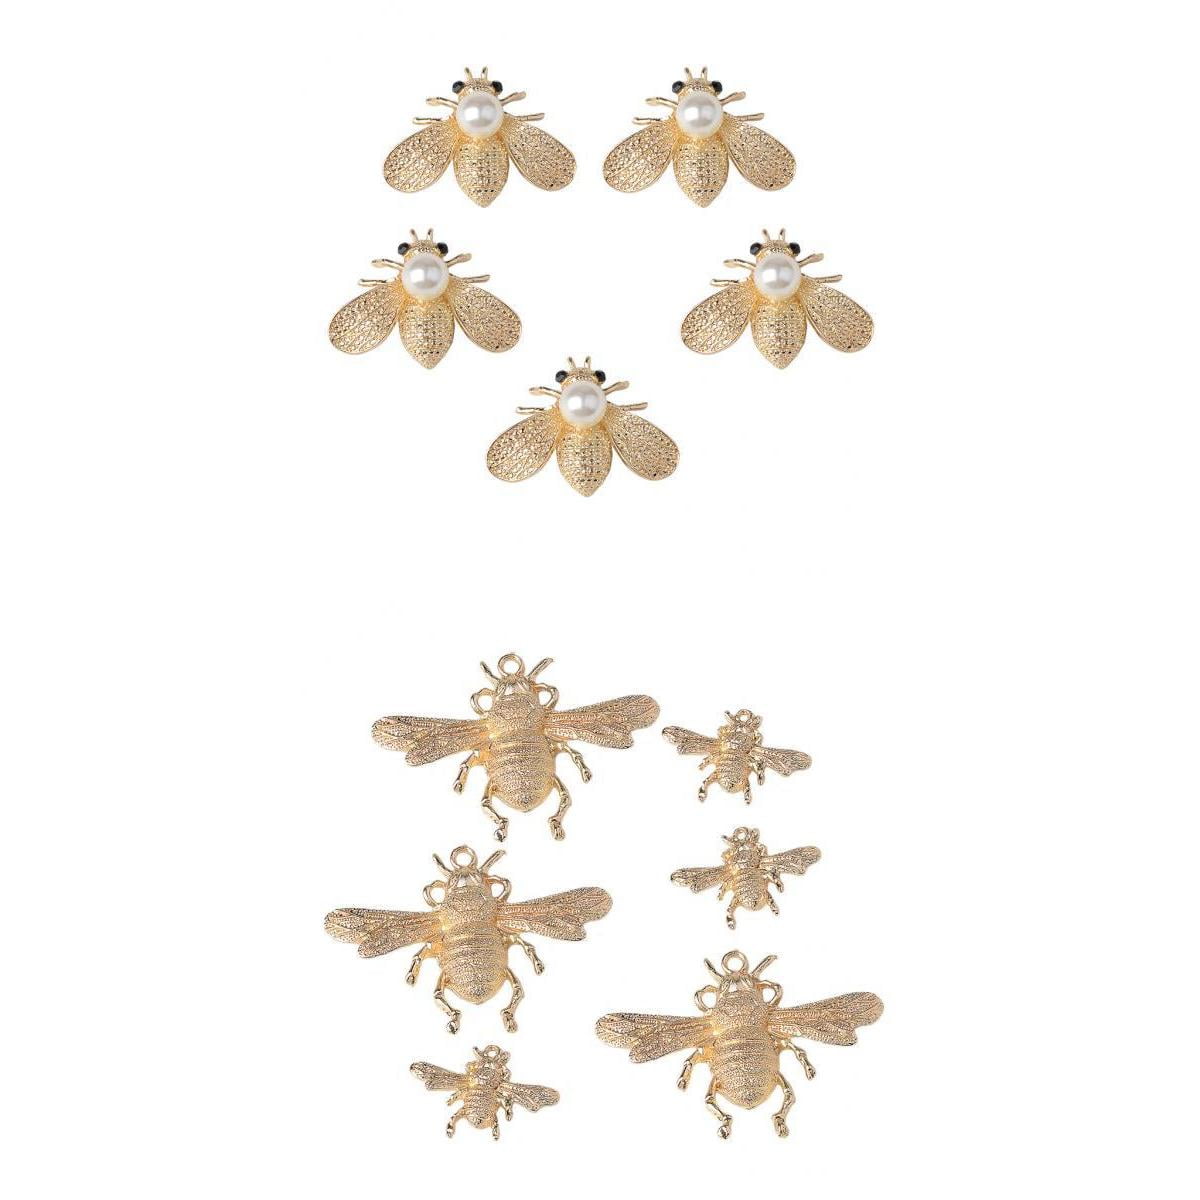 5 Lovely Alloy Bee Rhinestone Embellishment Decorative Flatback Buttons 25mm